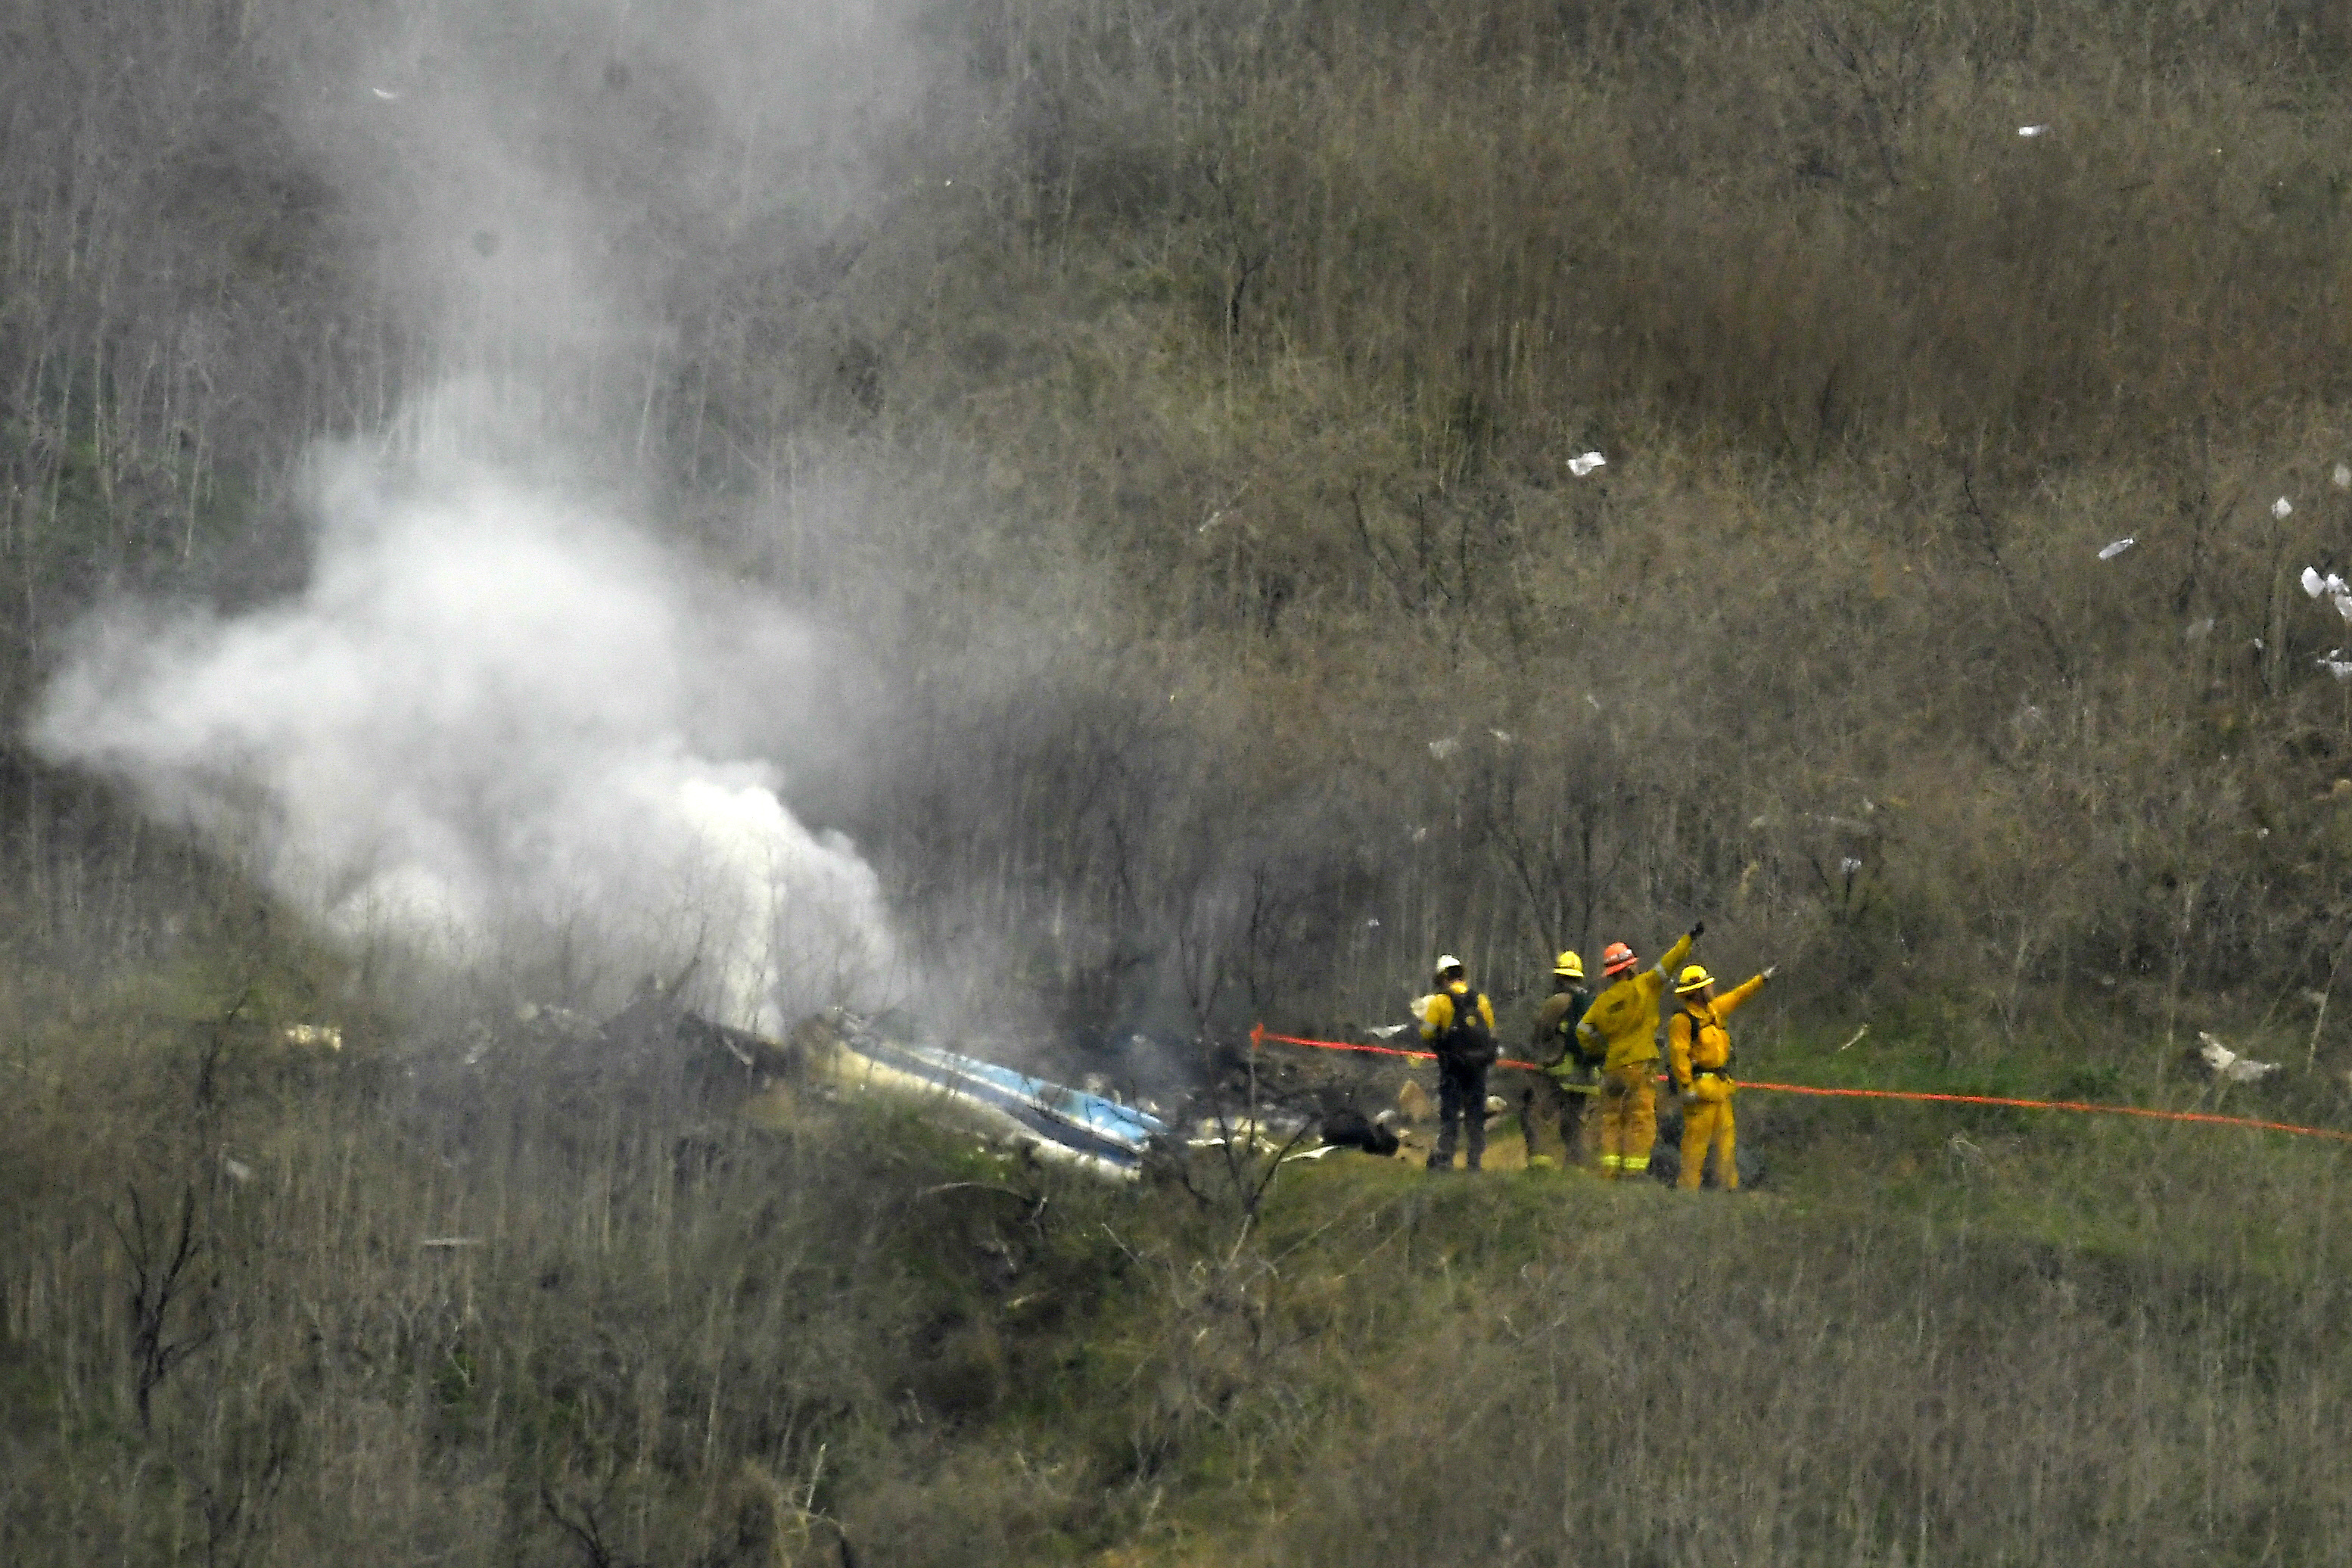 Victims of the Calabasas helicopter crash: Christina Mauser, Ara